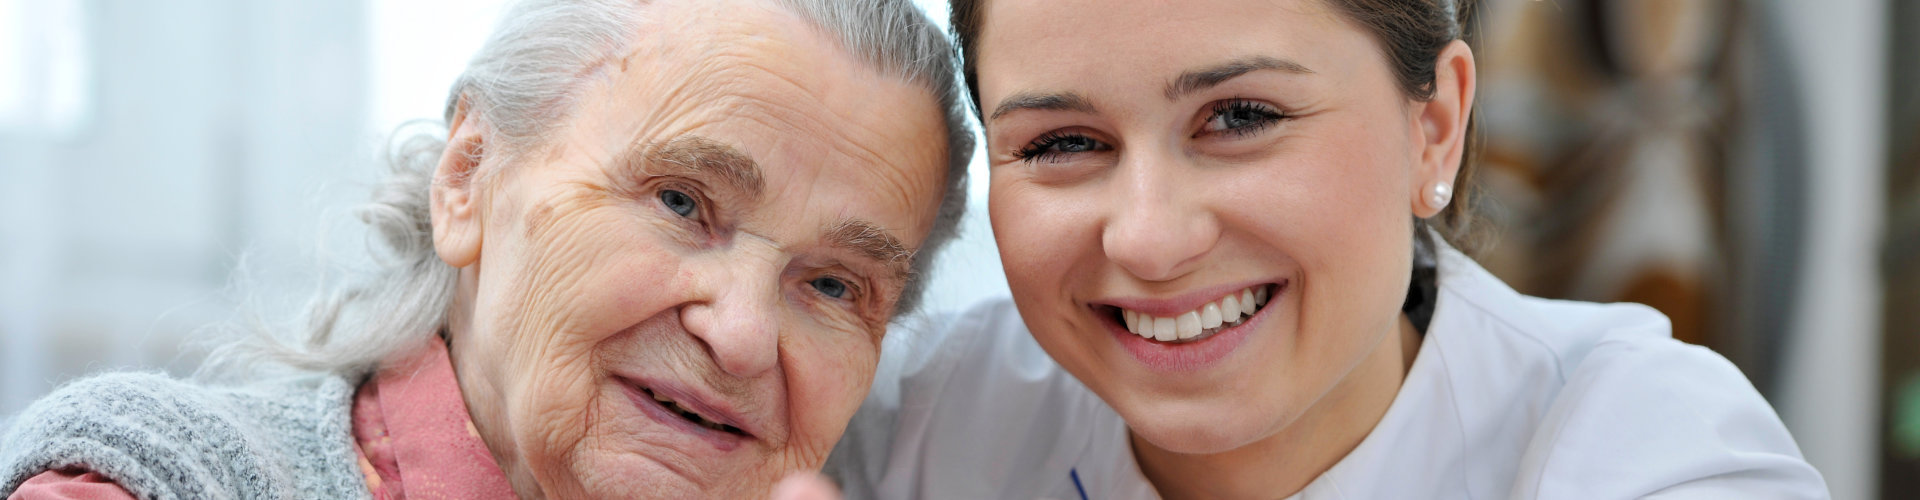 nurse smiling with elderly woman